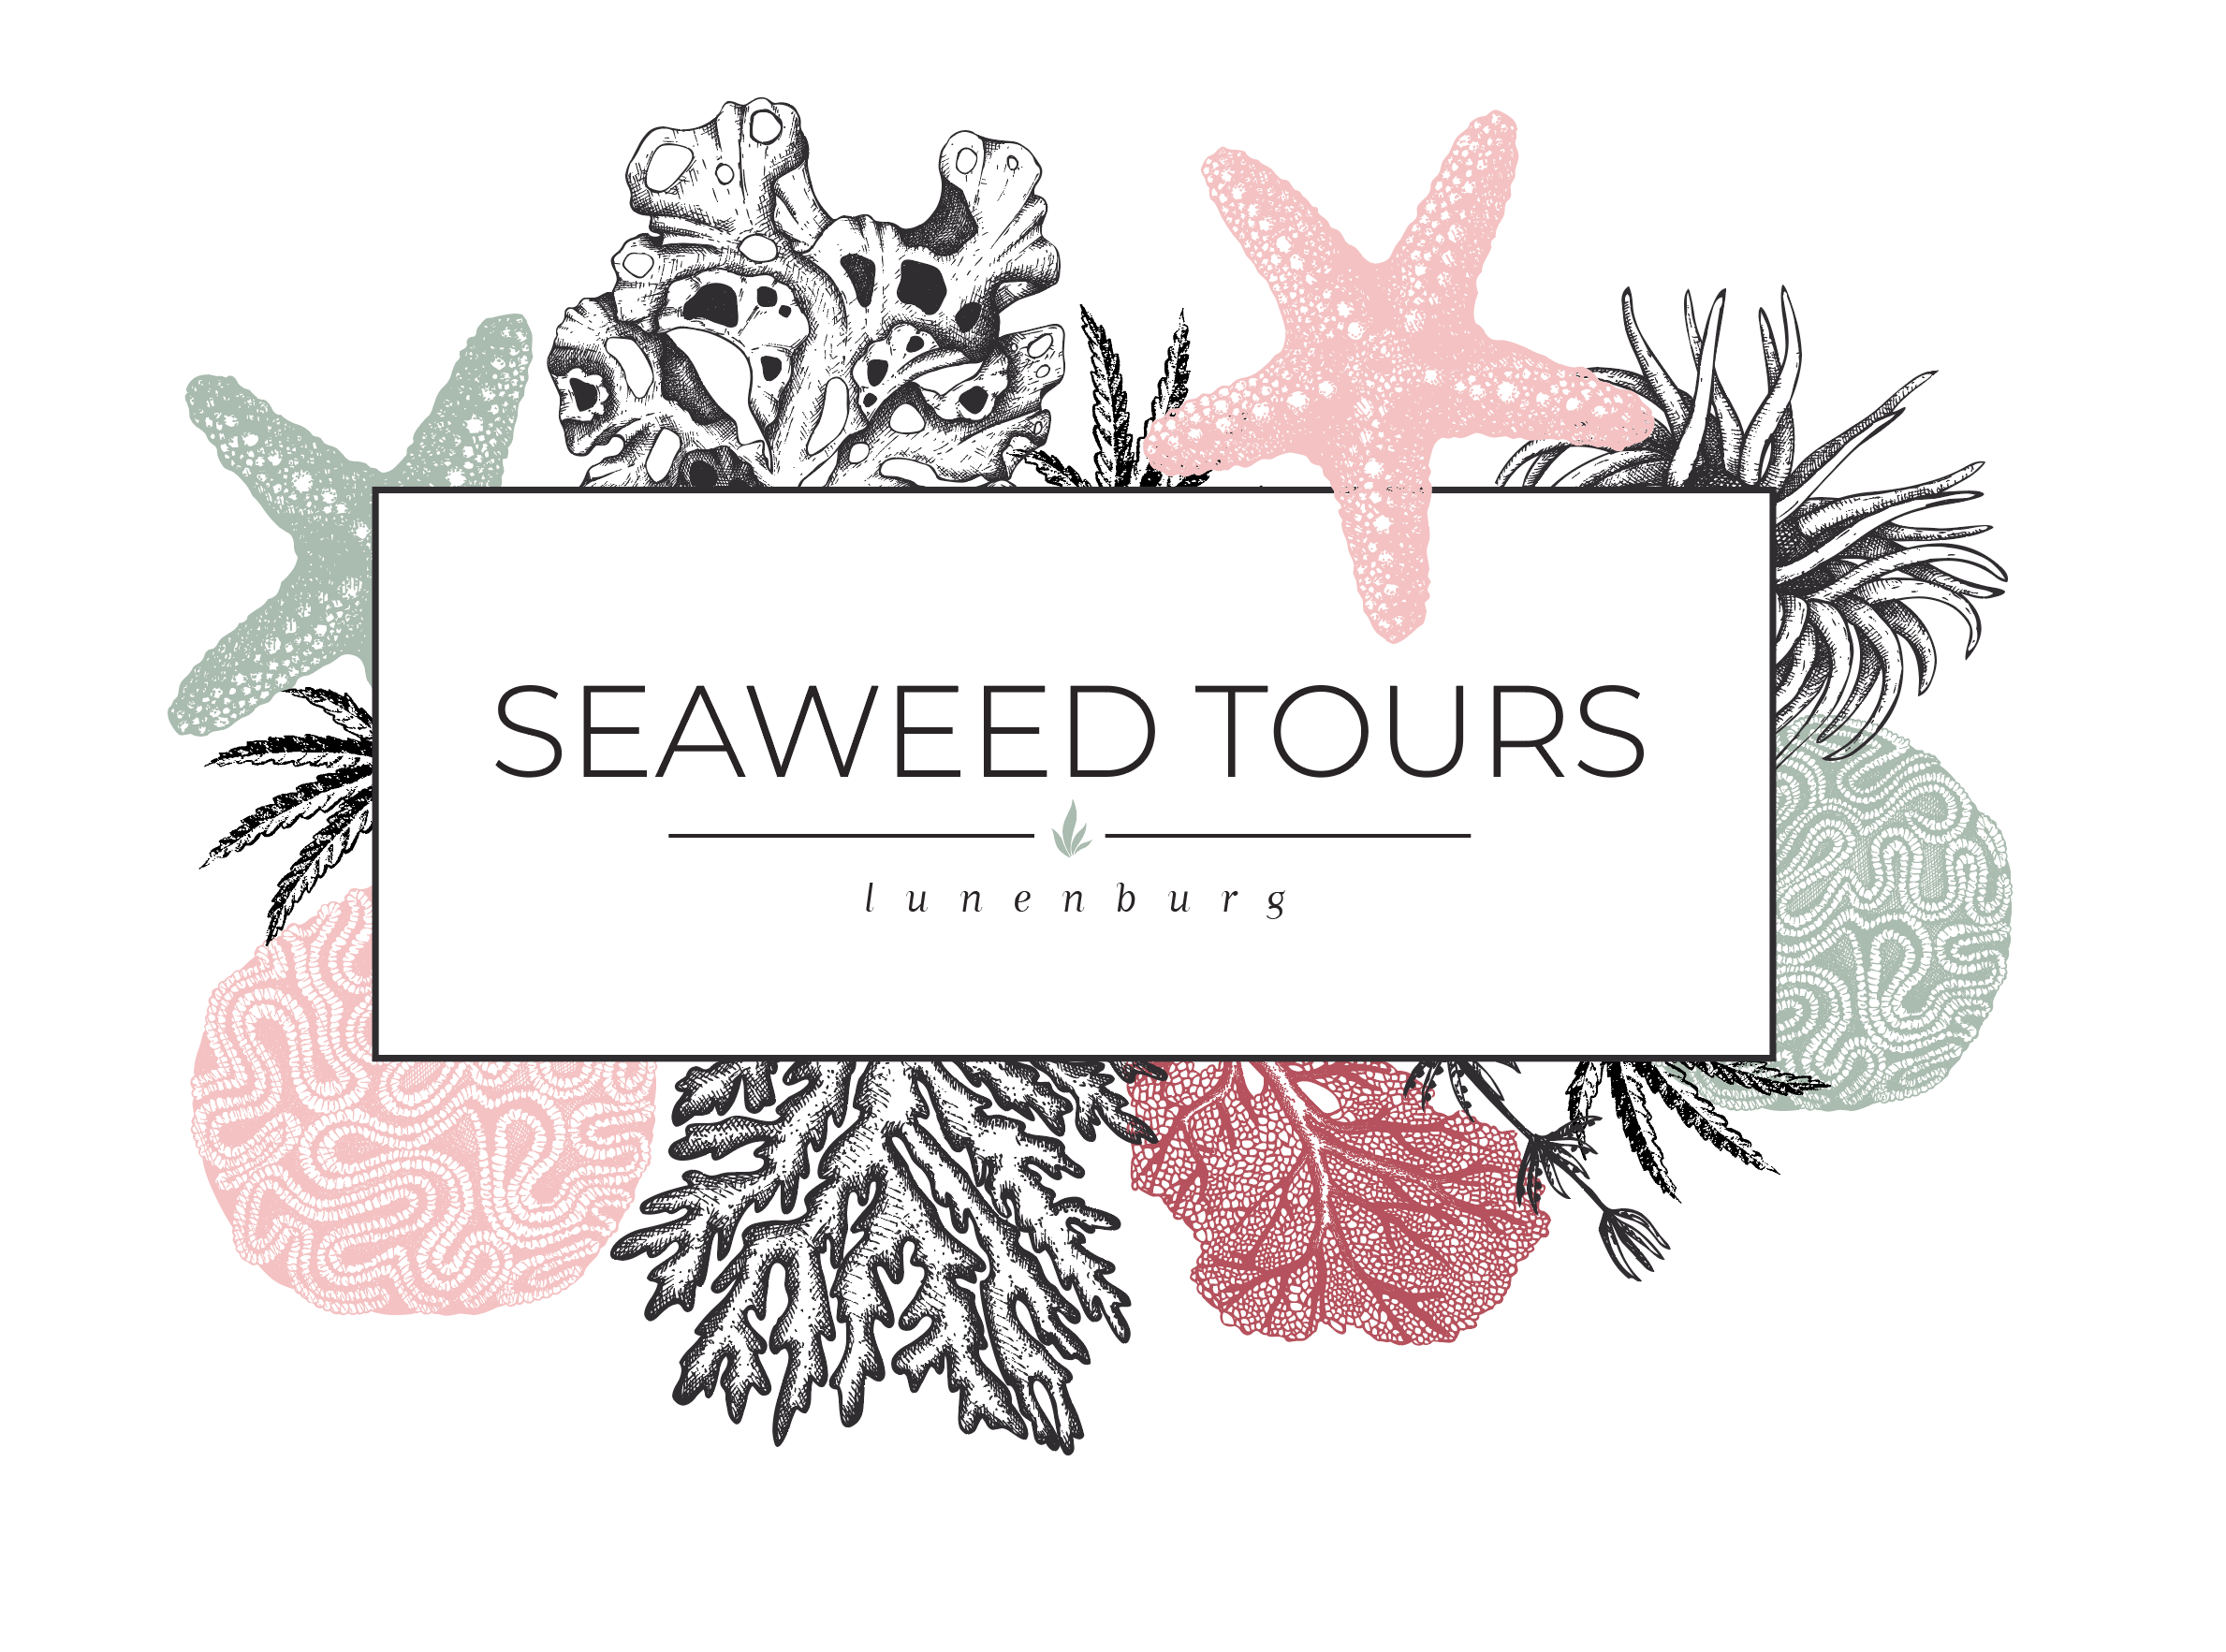 Seaweed Tours : Scenic Storytelling Tours Lunenburg, NS